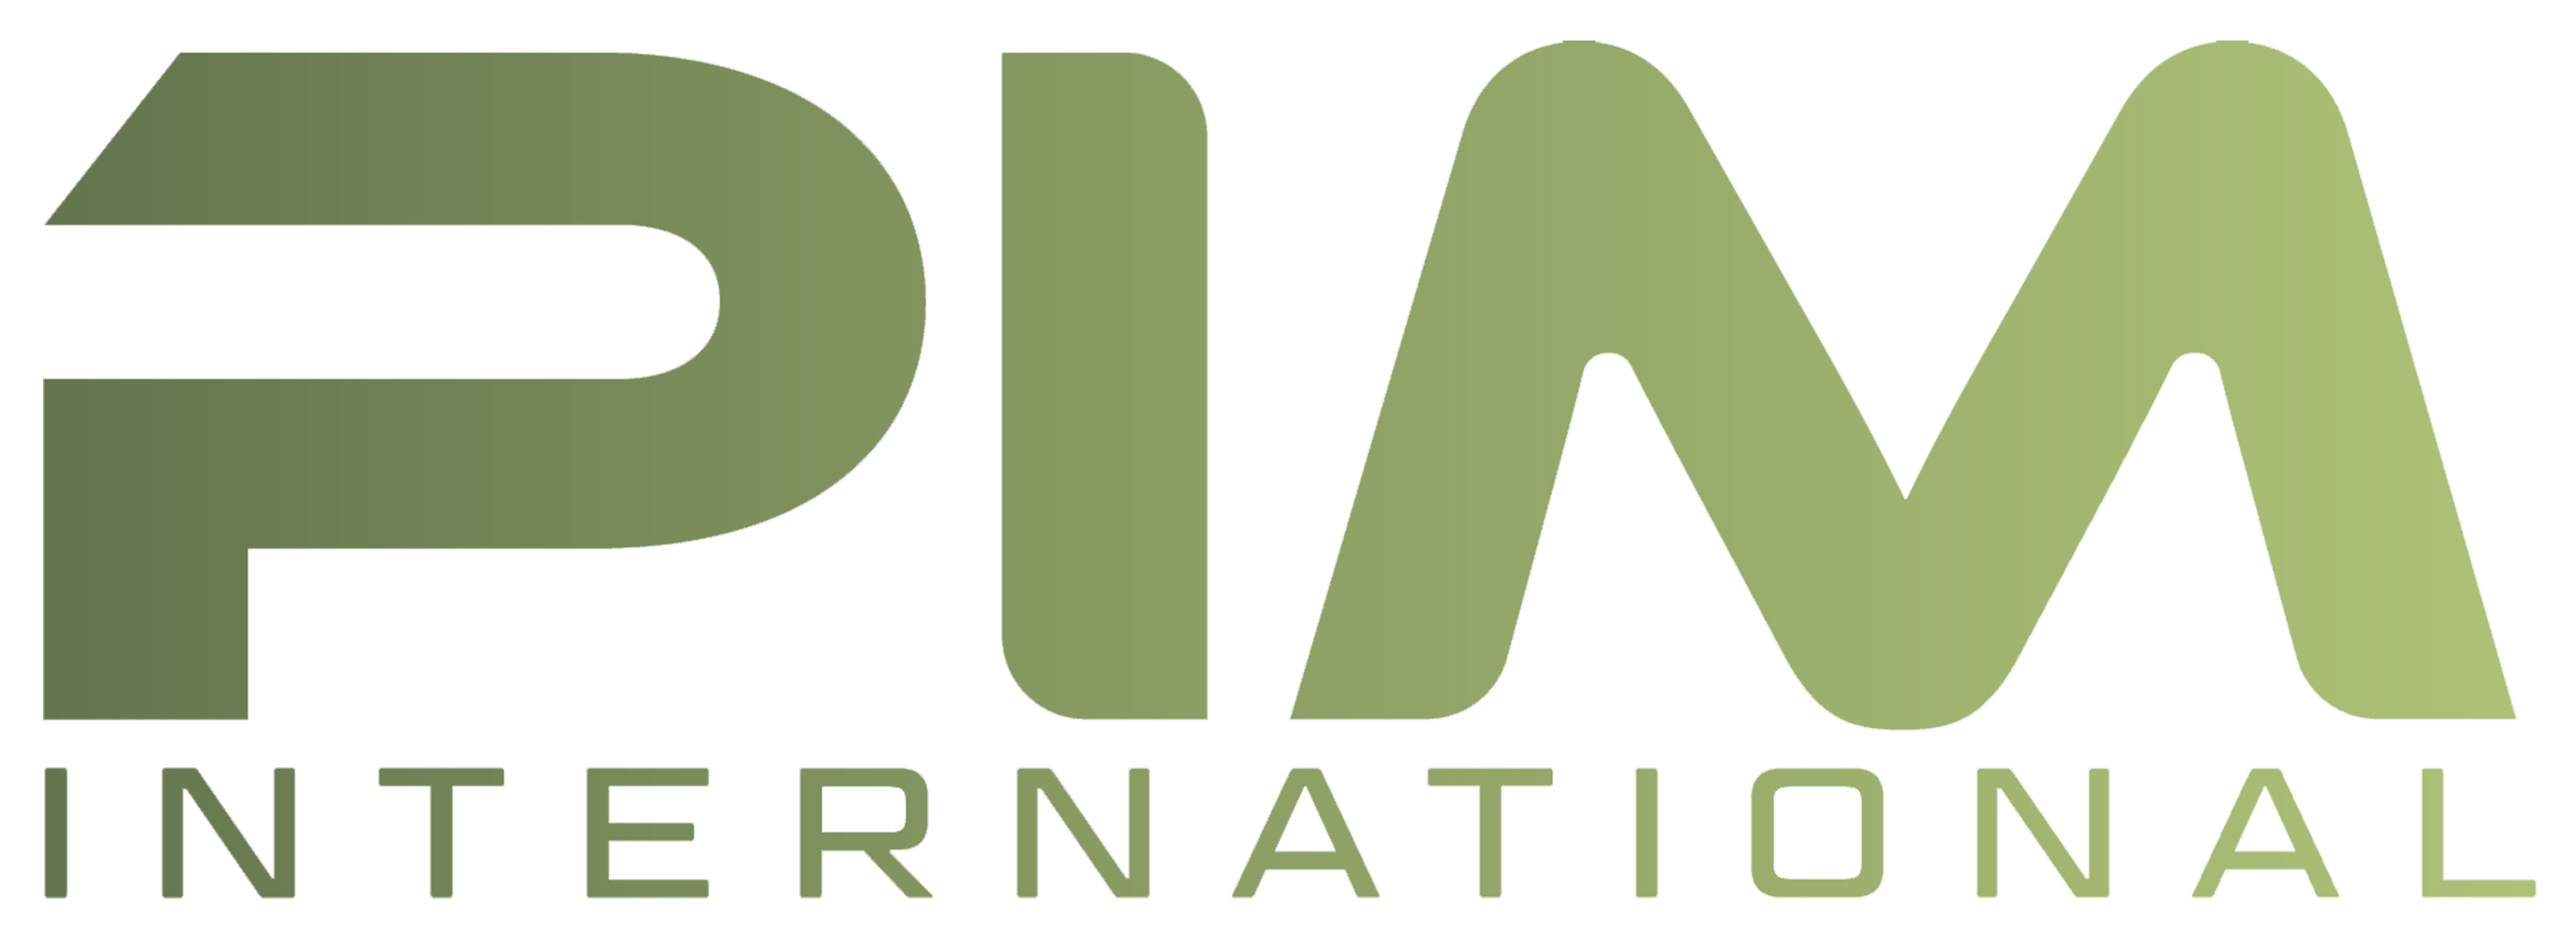 PIM International logo.png